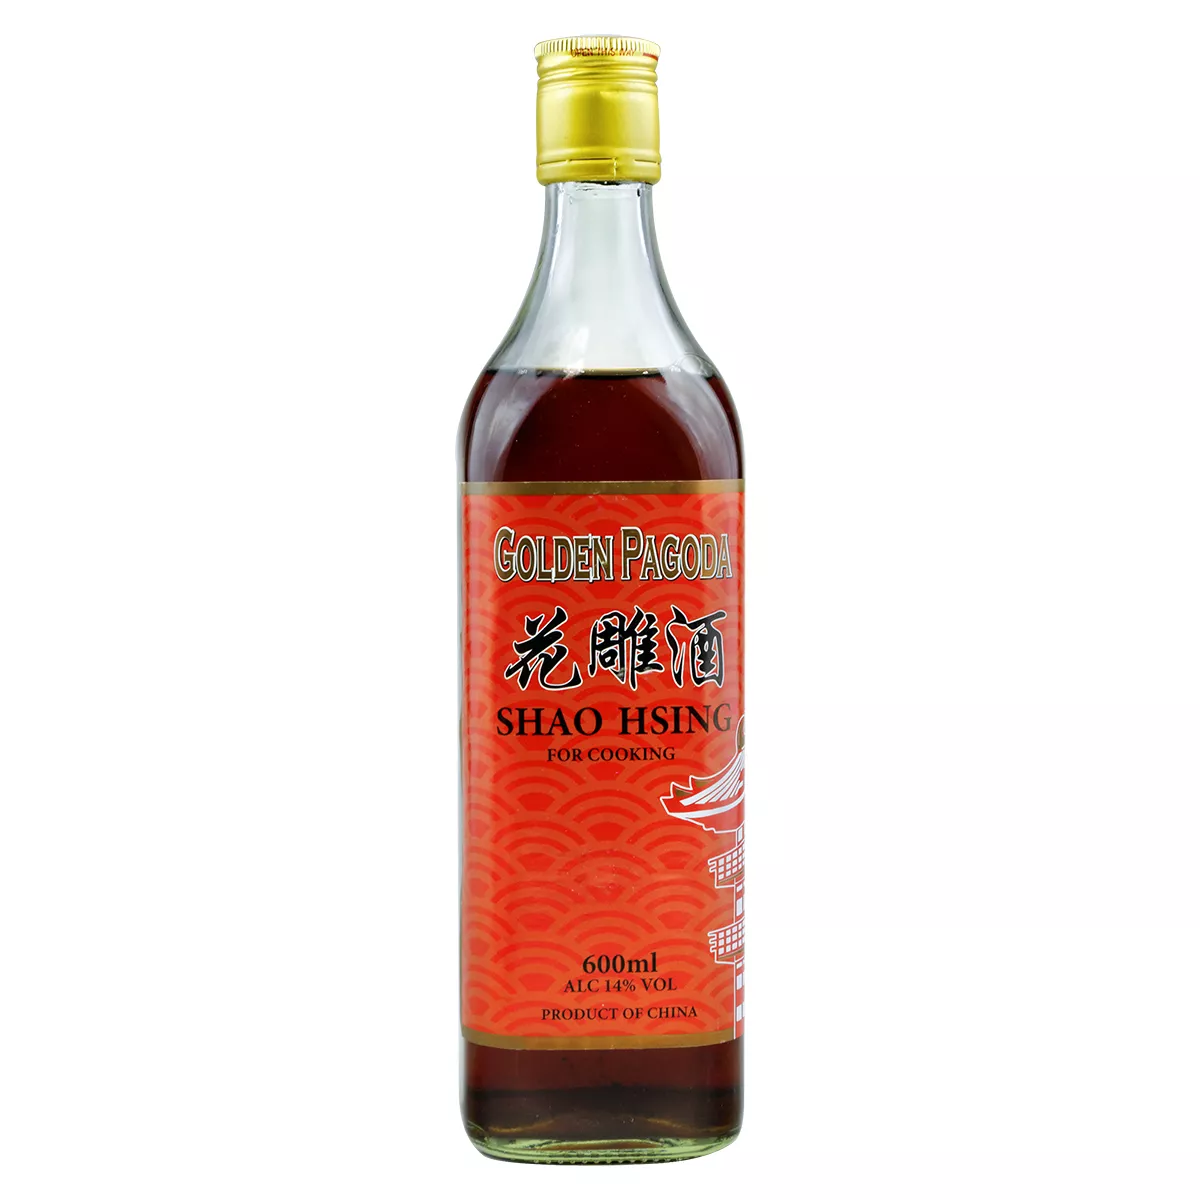 Vin de gatit Shao Hsing GOLDEN PAGODA 600ml, [],asianfood.ro